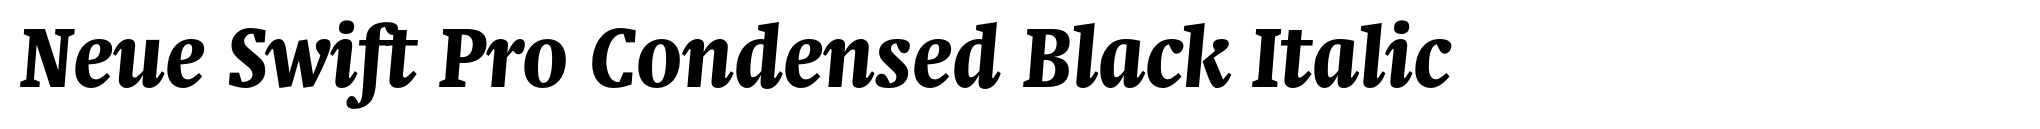 Neue Swift Pro Condensed Black Italic image